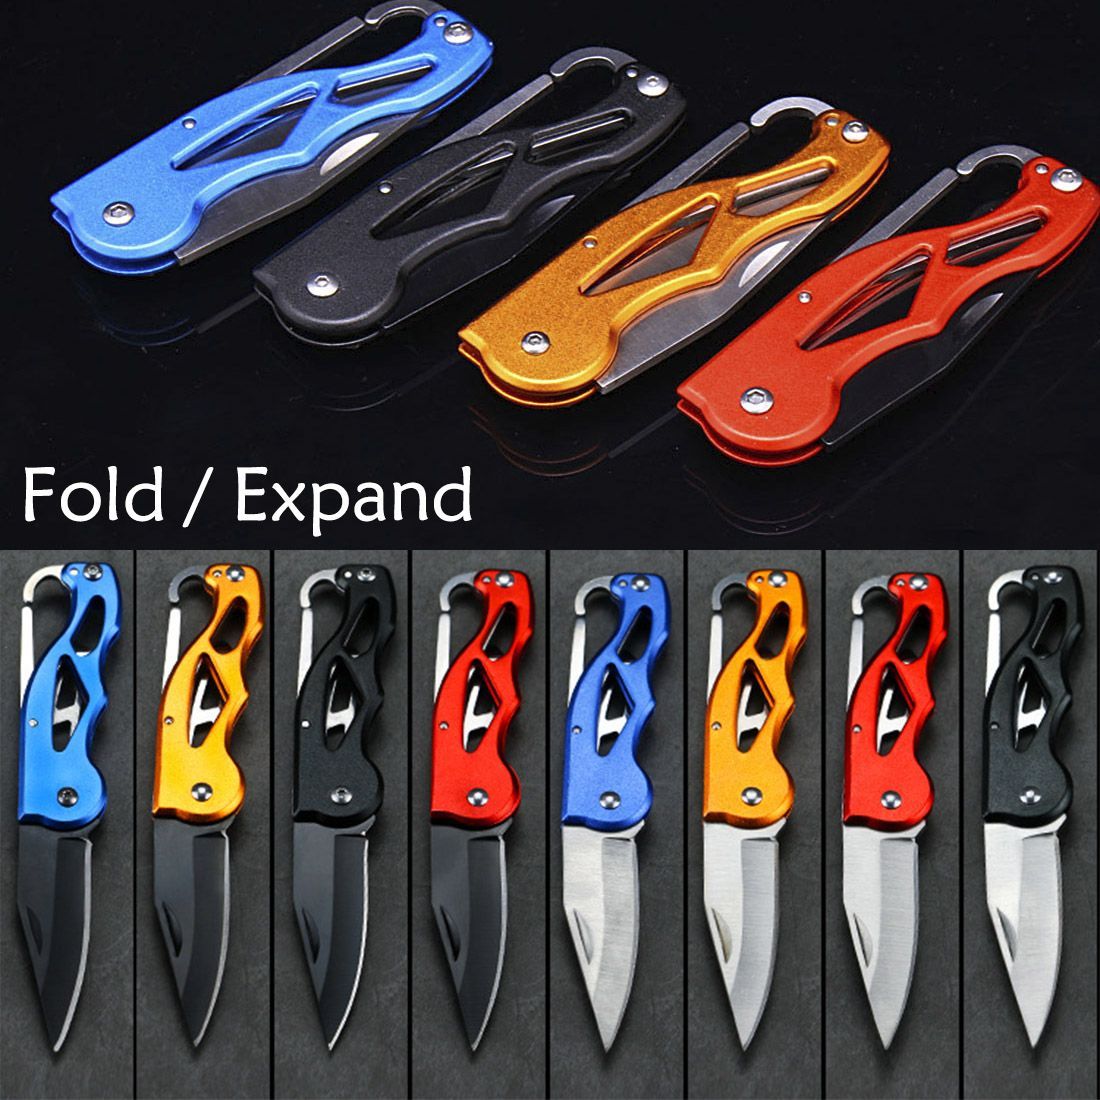 Multi-function-Field-Survival-Folding-Knifee-Outdoor-Foldable-Pocket-Knifee-Gift-knifee-Camping-Surv-1718071